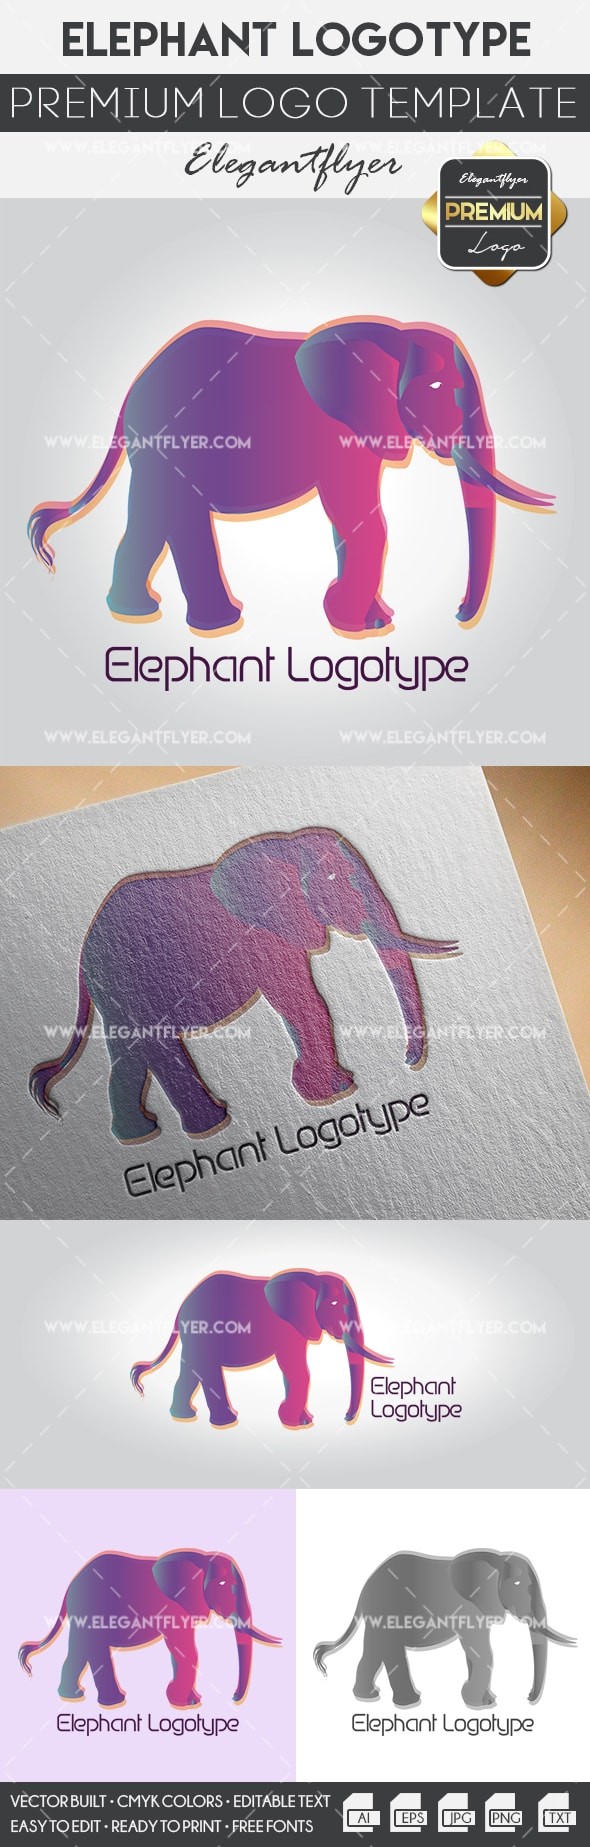 Elefante by ElegantFlyer